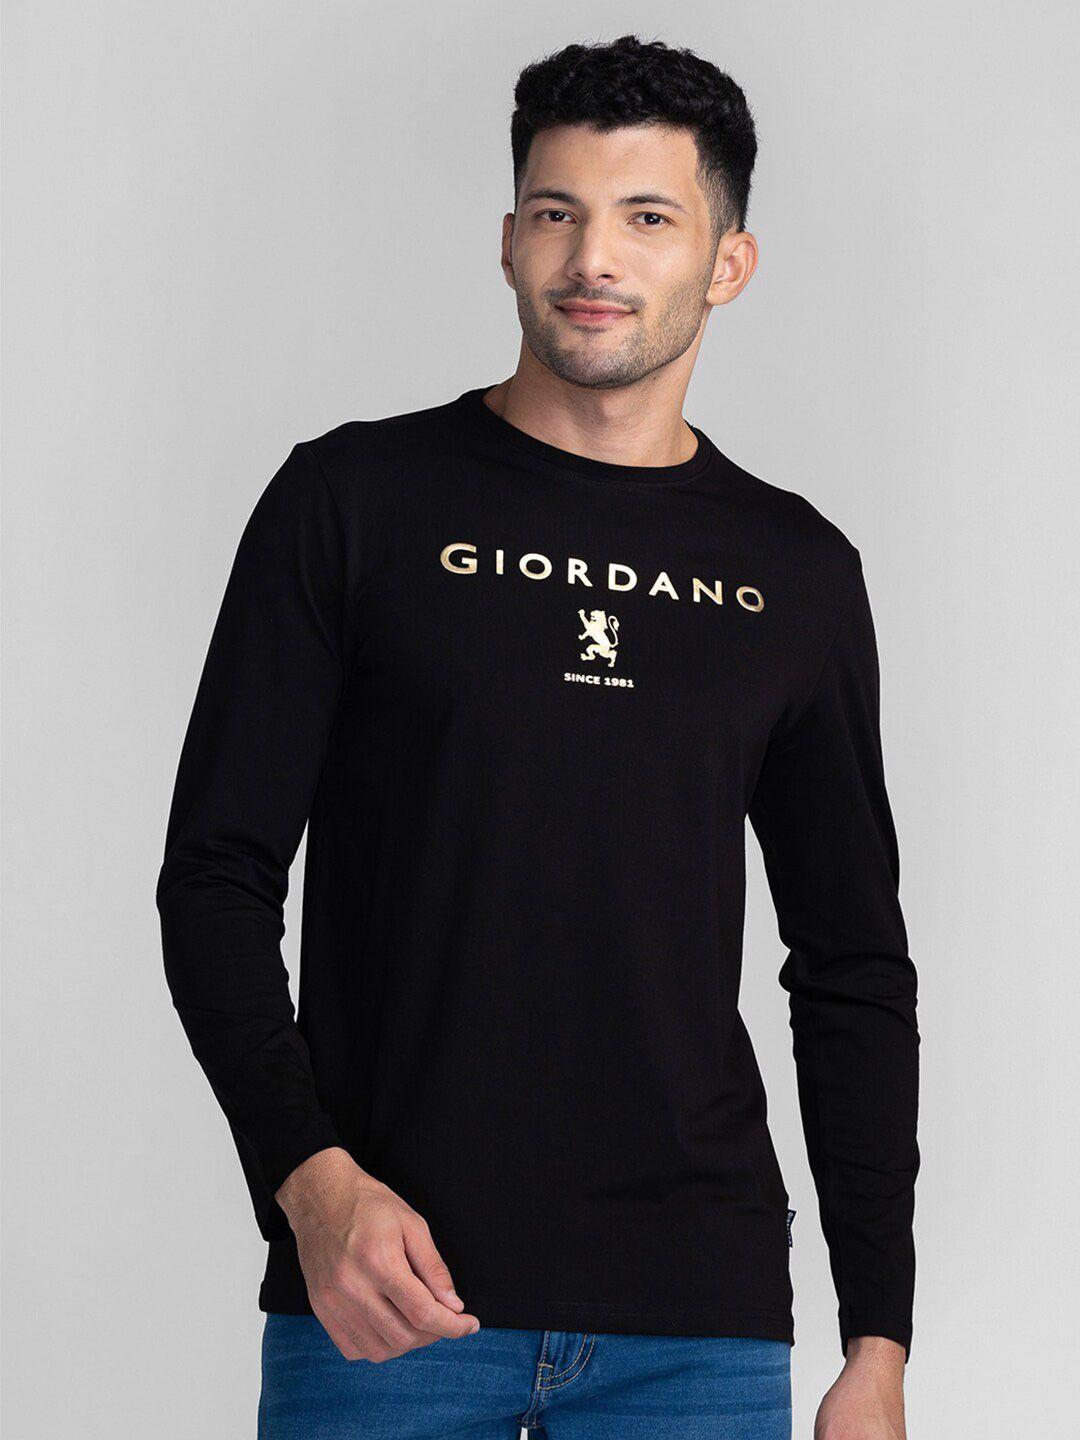 giordano-men-typography-printed-monochrome-applique-slim-fit-t-shirt